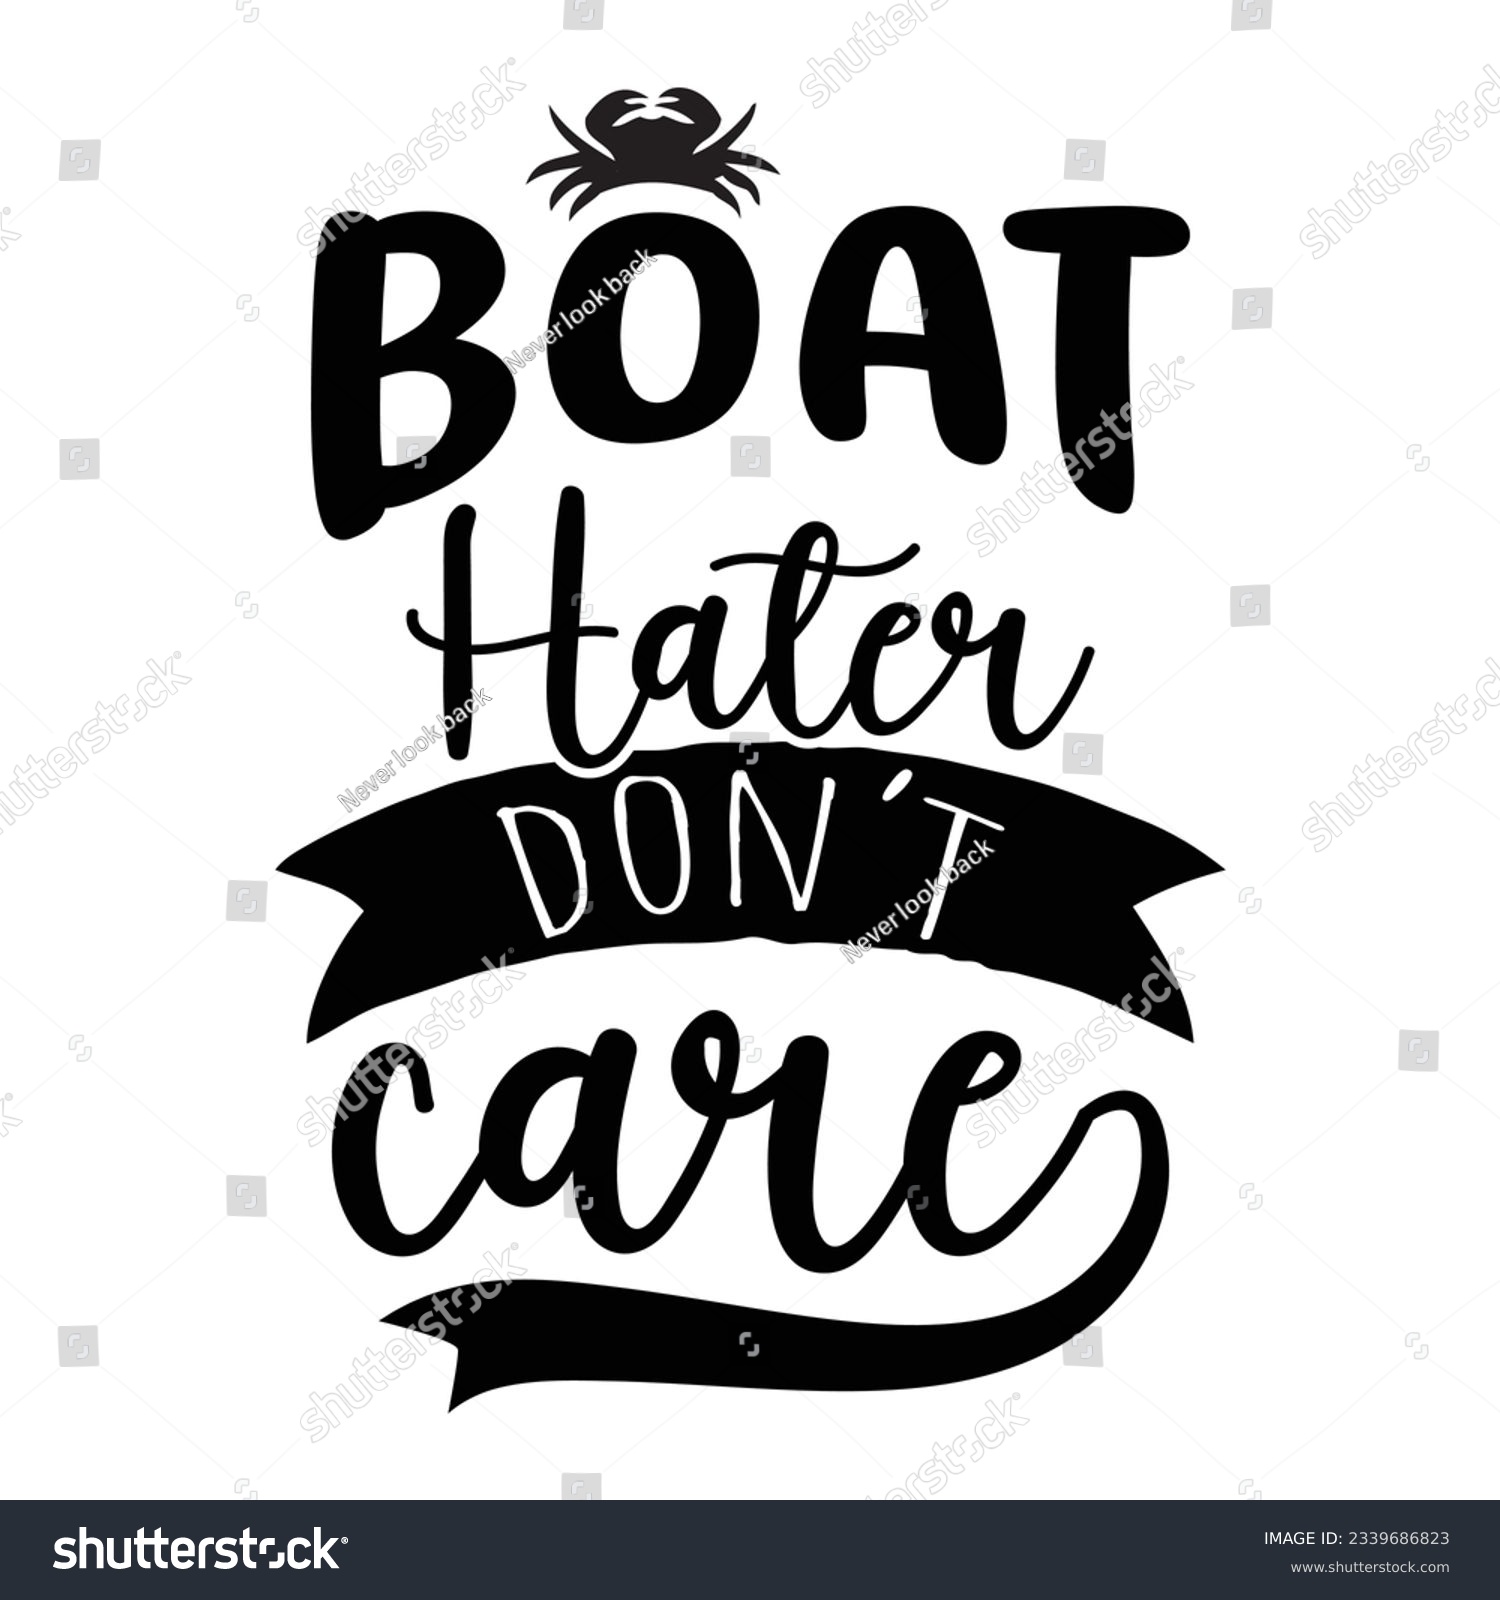 SVG of 

boat hater don't care SVG t-shirt design, summer SVG, summer quotes , waves SVG, beach, summer time  SVG, Hand drawn vintage illustration with lettering and decoration elements svg